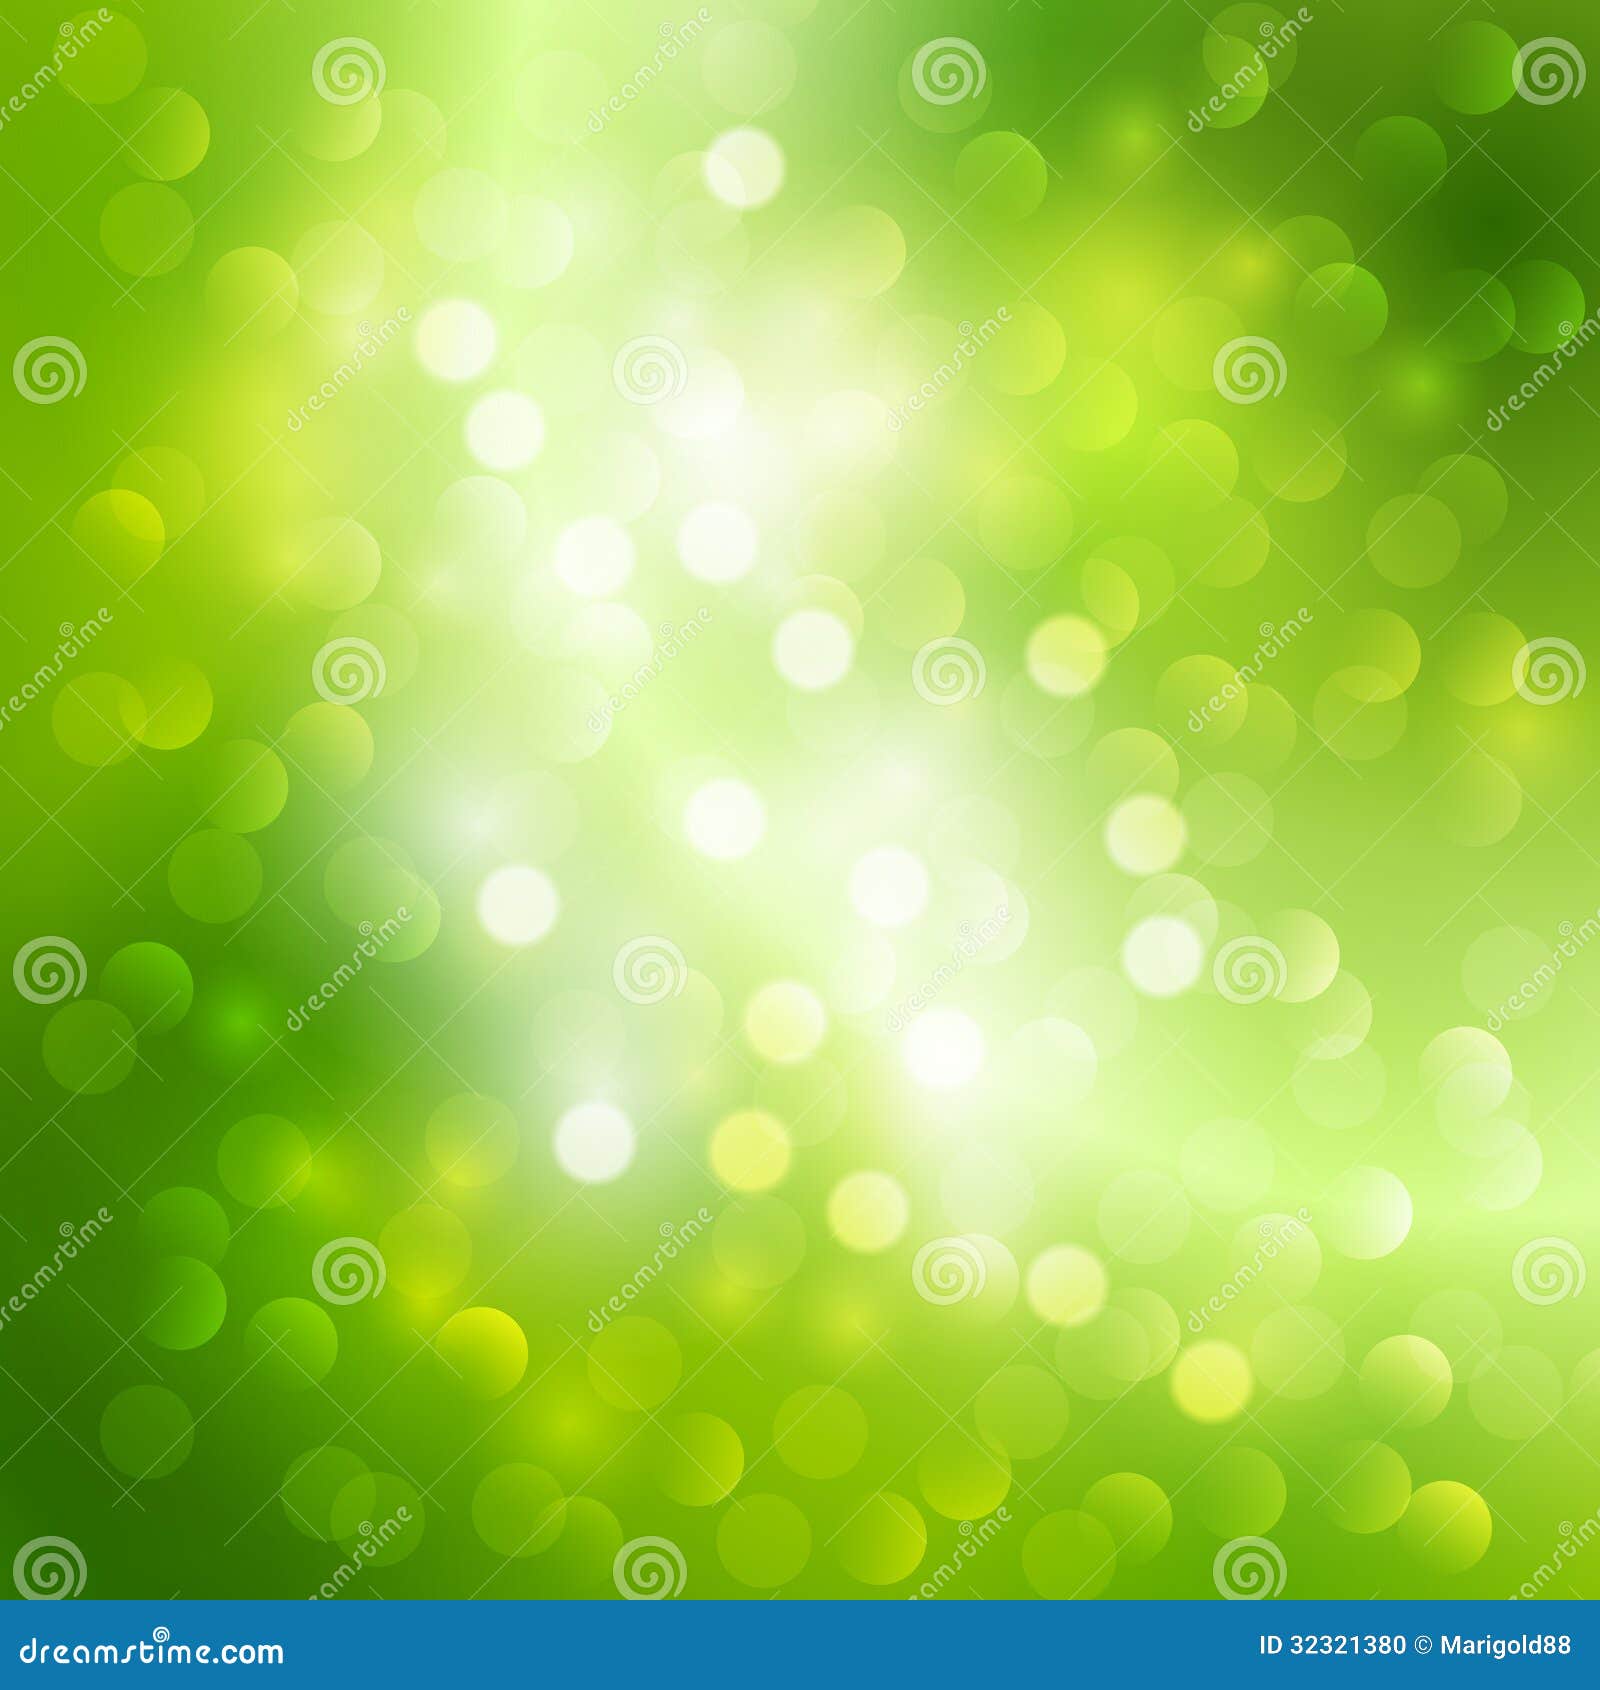 Green light background stock vector. Illustration of rich - 32321380